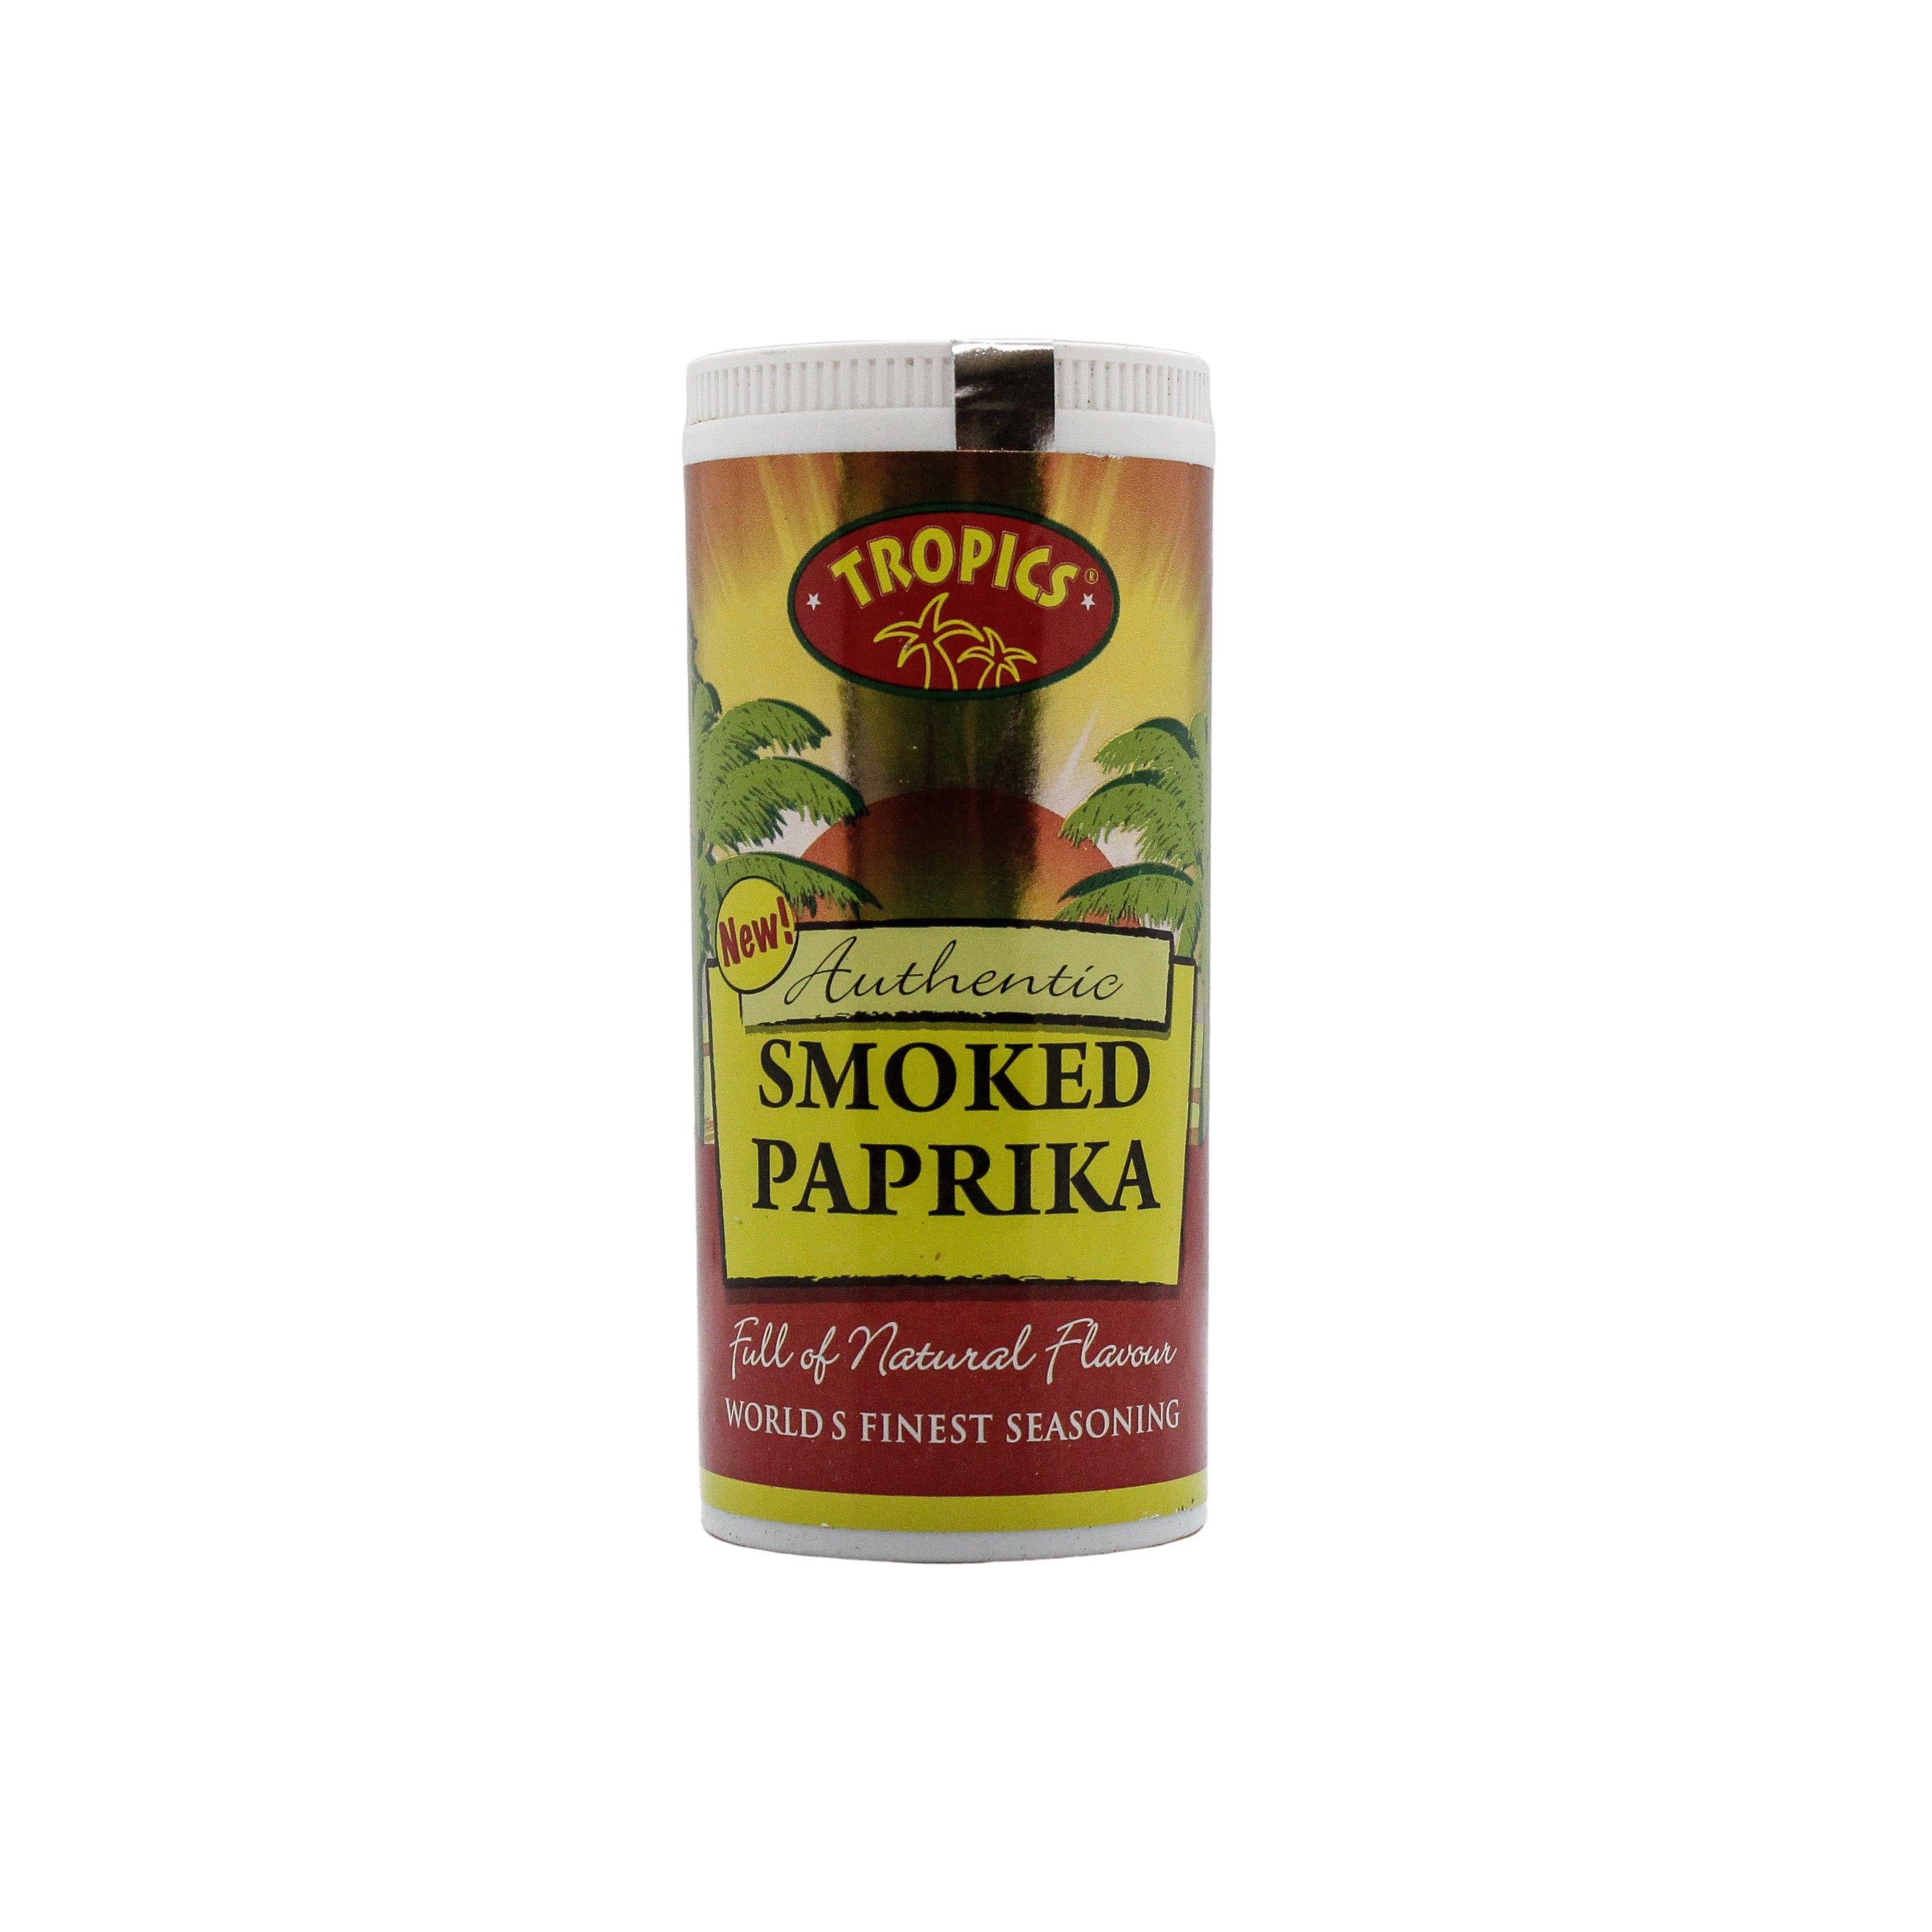 Tropics smoked paprika seasoning SaveCo Online Ltd